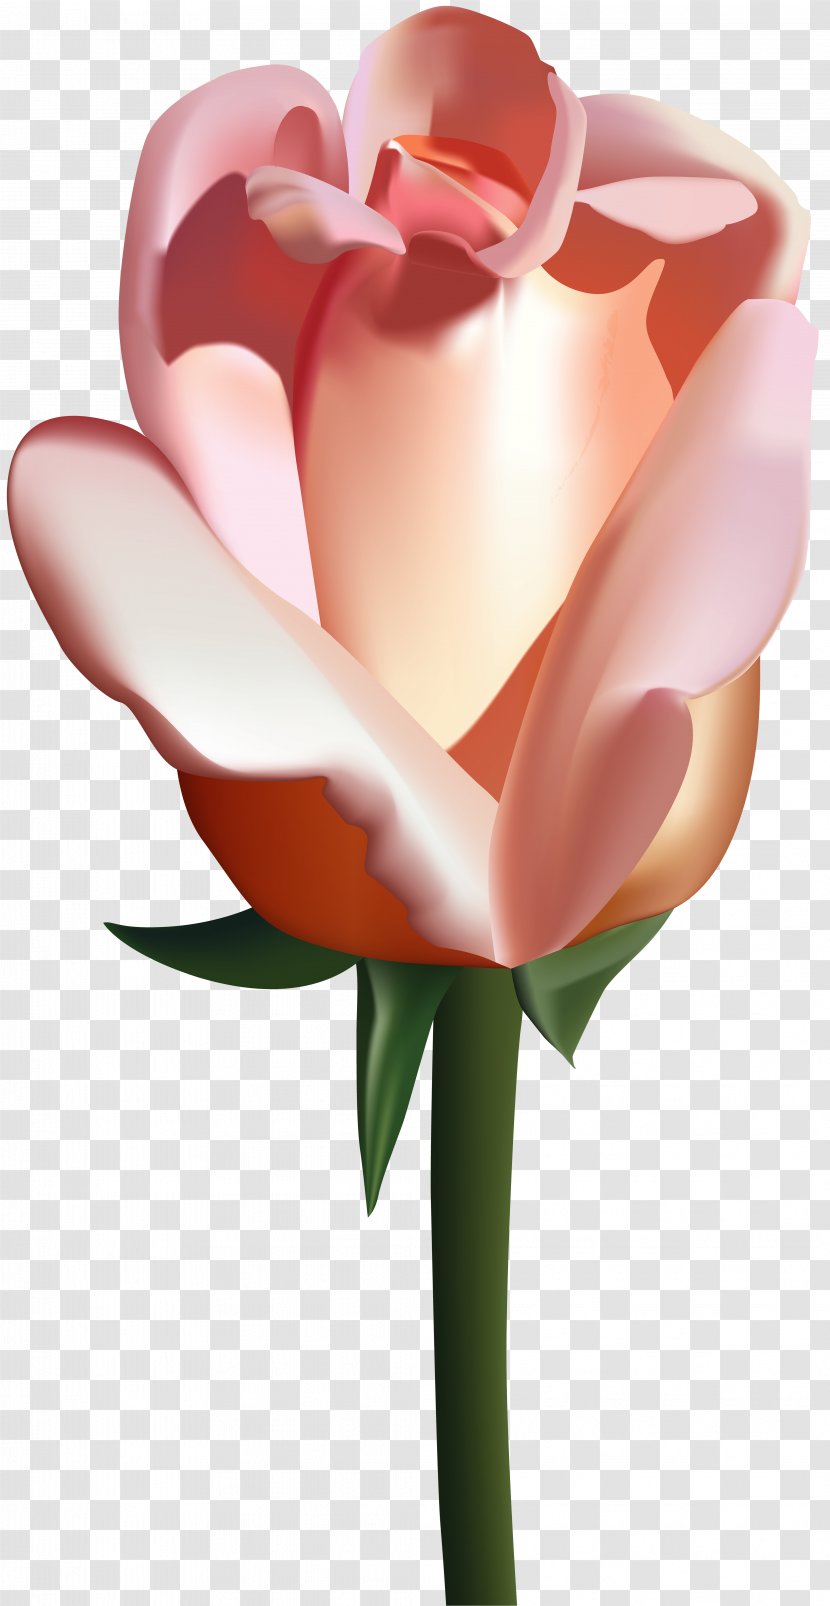 Garden Roses Clip Art - Peach - Rose Image Transparent PNG